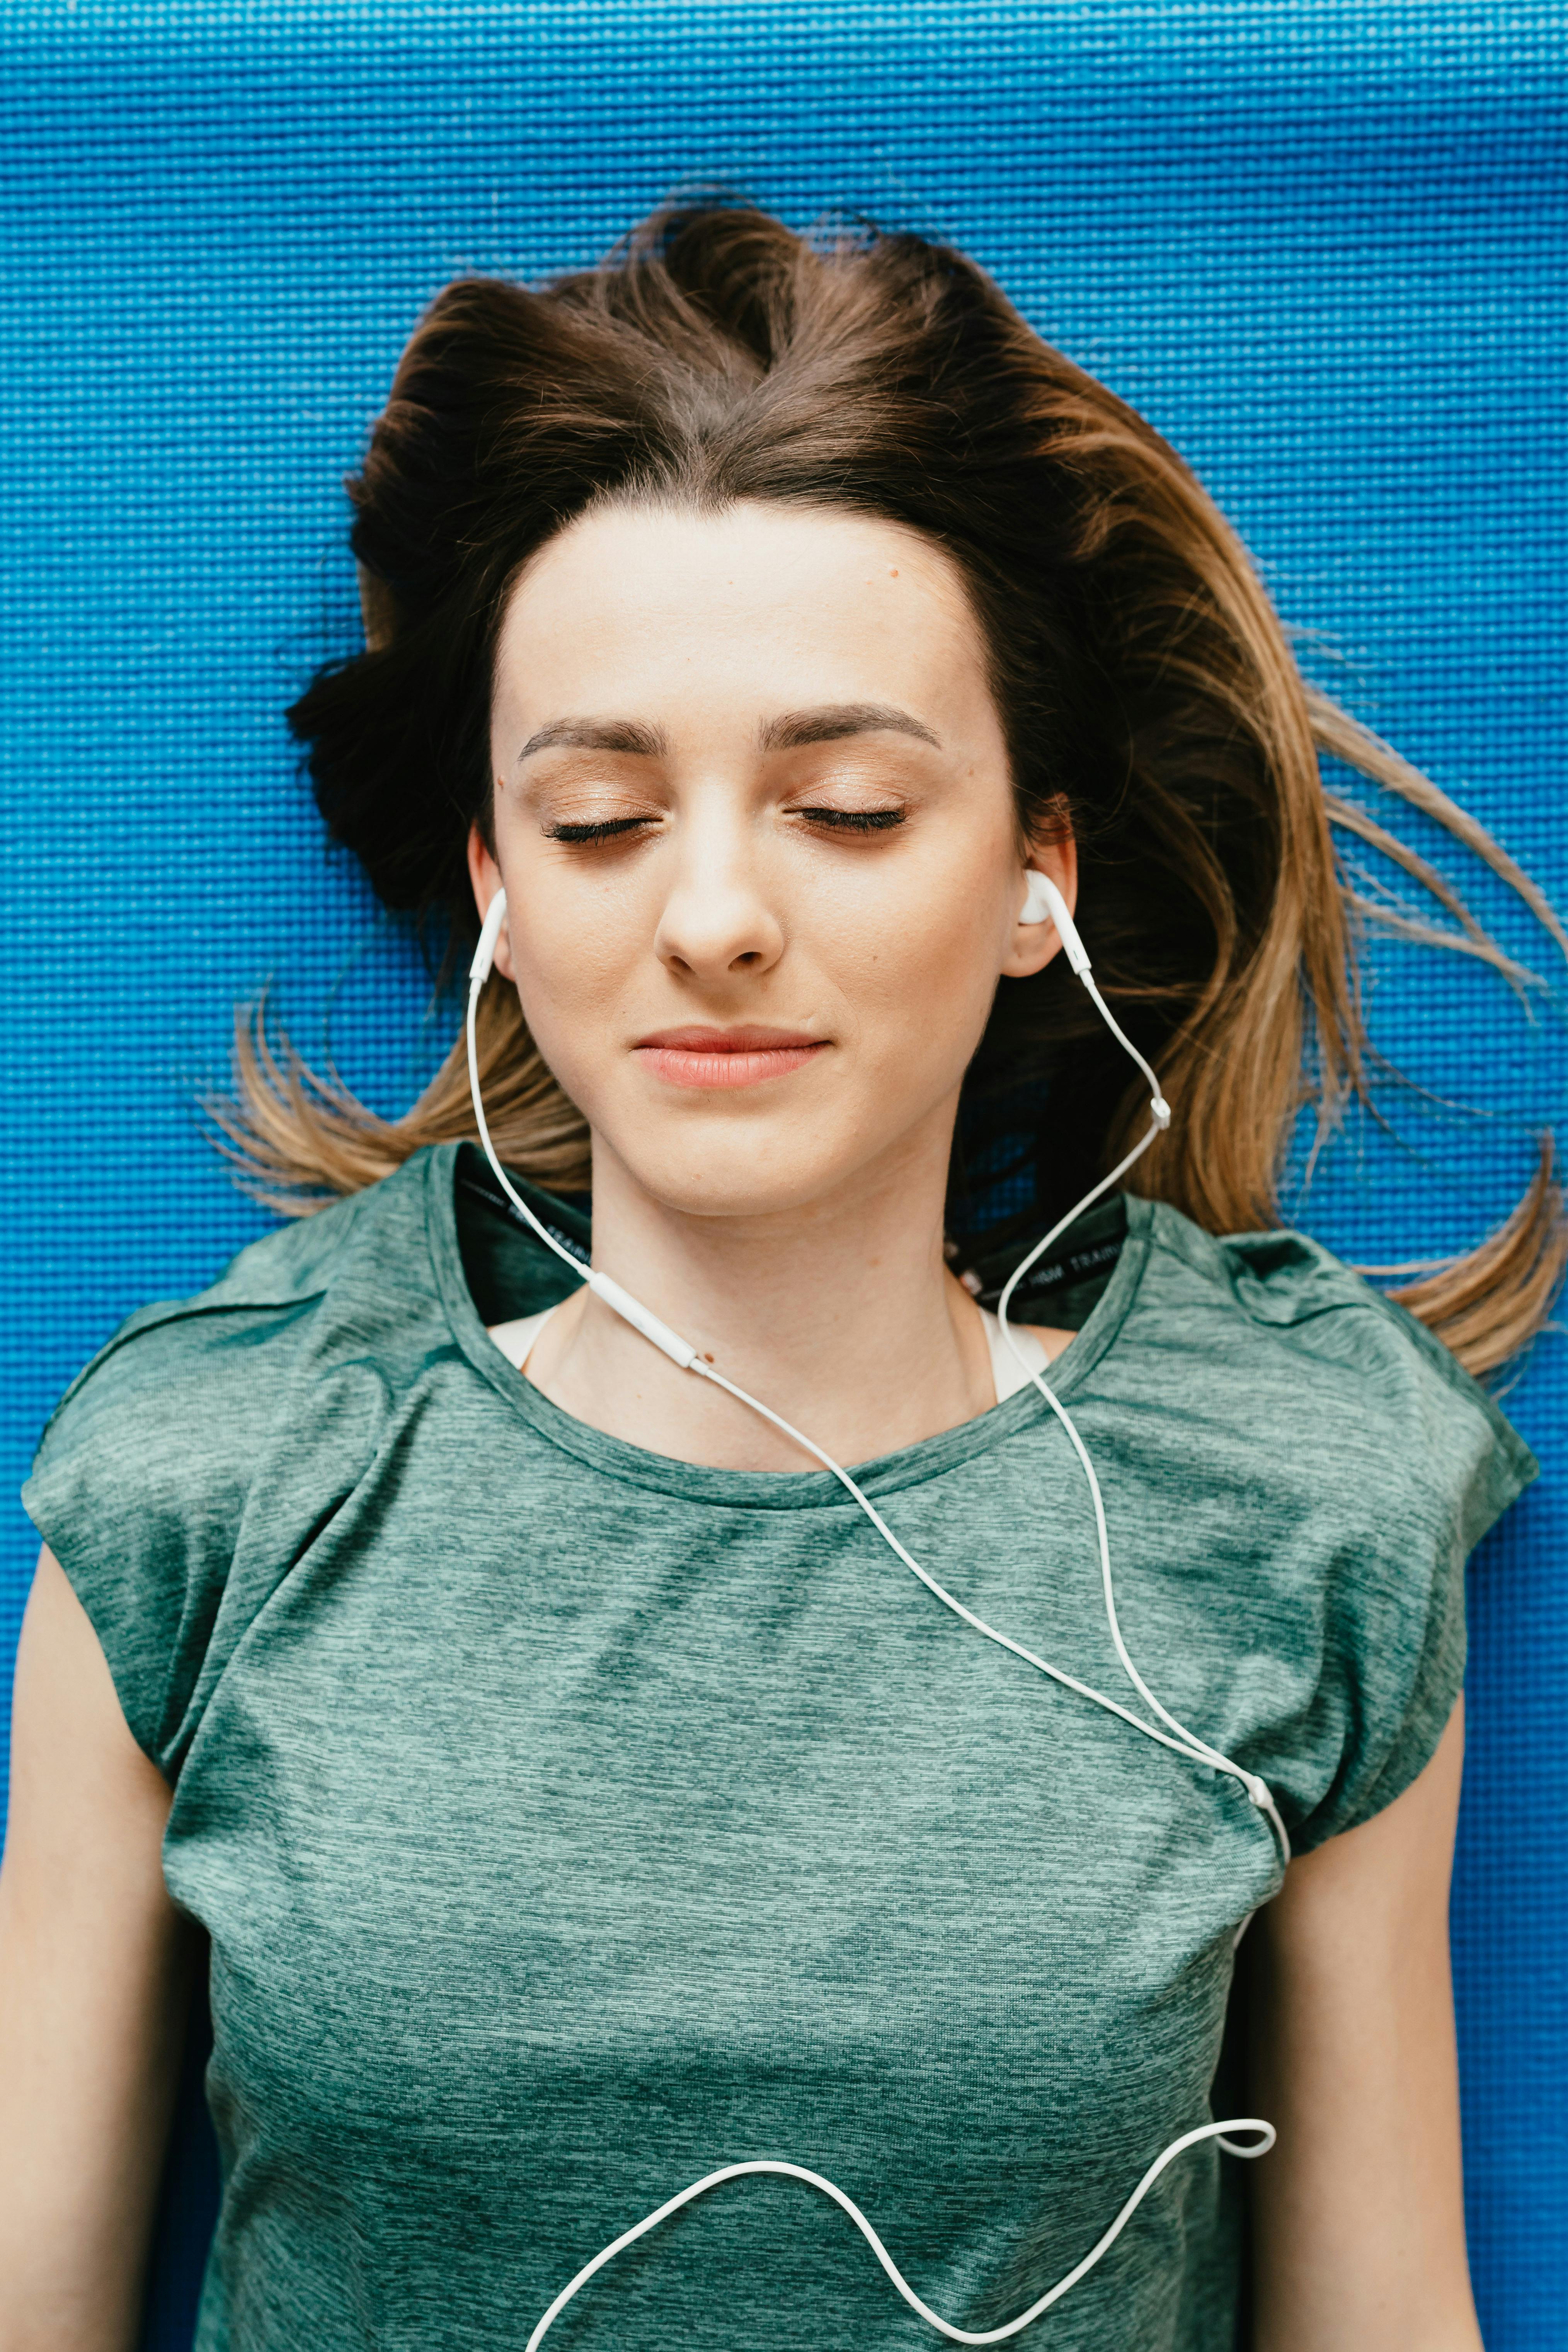 Does-the-brain-still-listen-while-sleeping